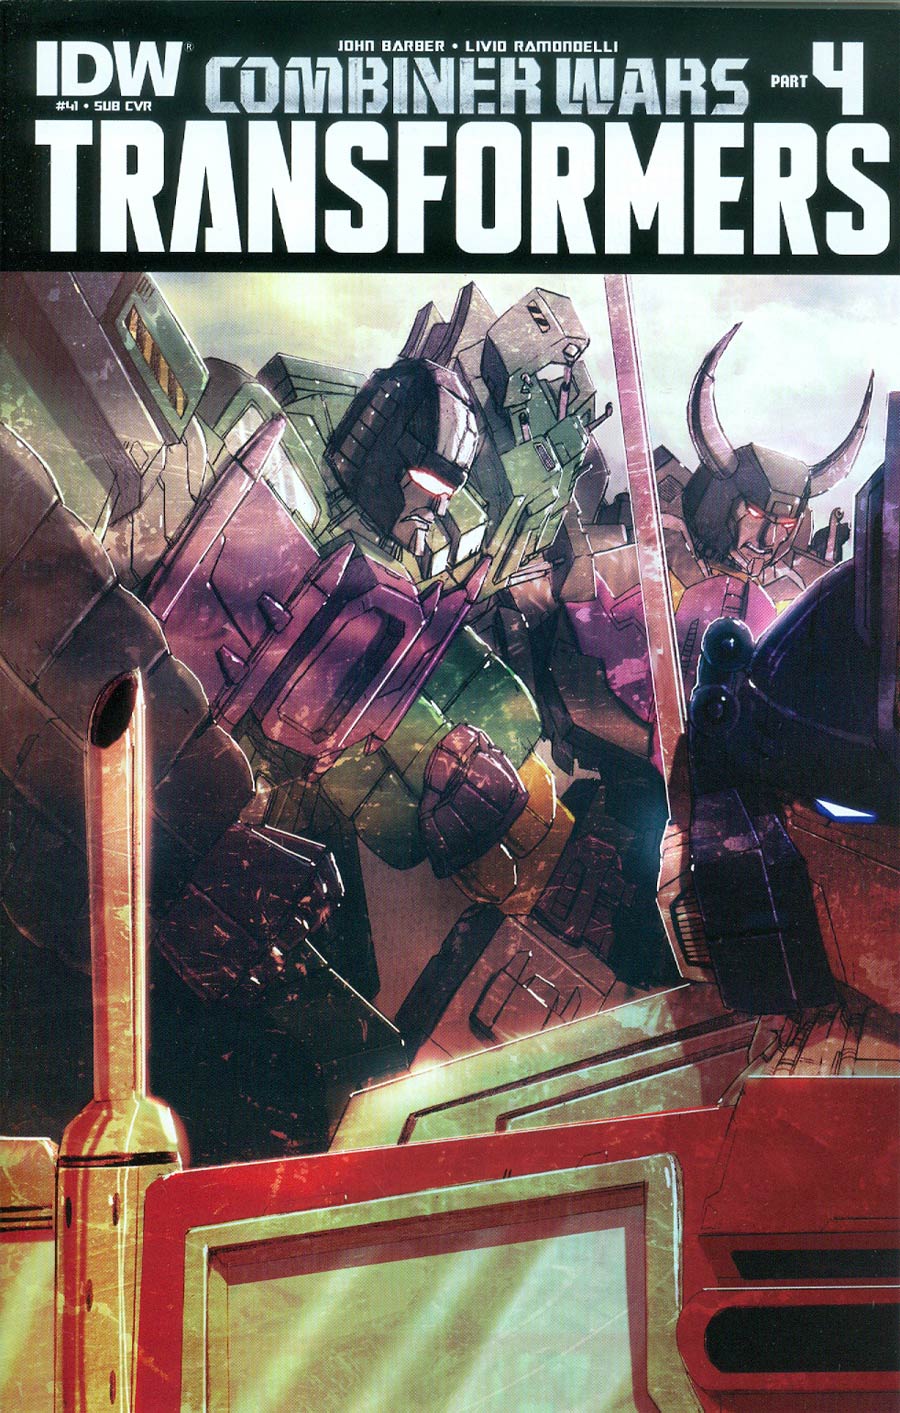 Transformers Vol 3 #41 Cover B Variant Livio Ramondelli Subscription Cover (Combiner Wars Part 4)